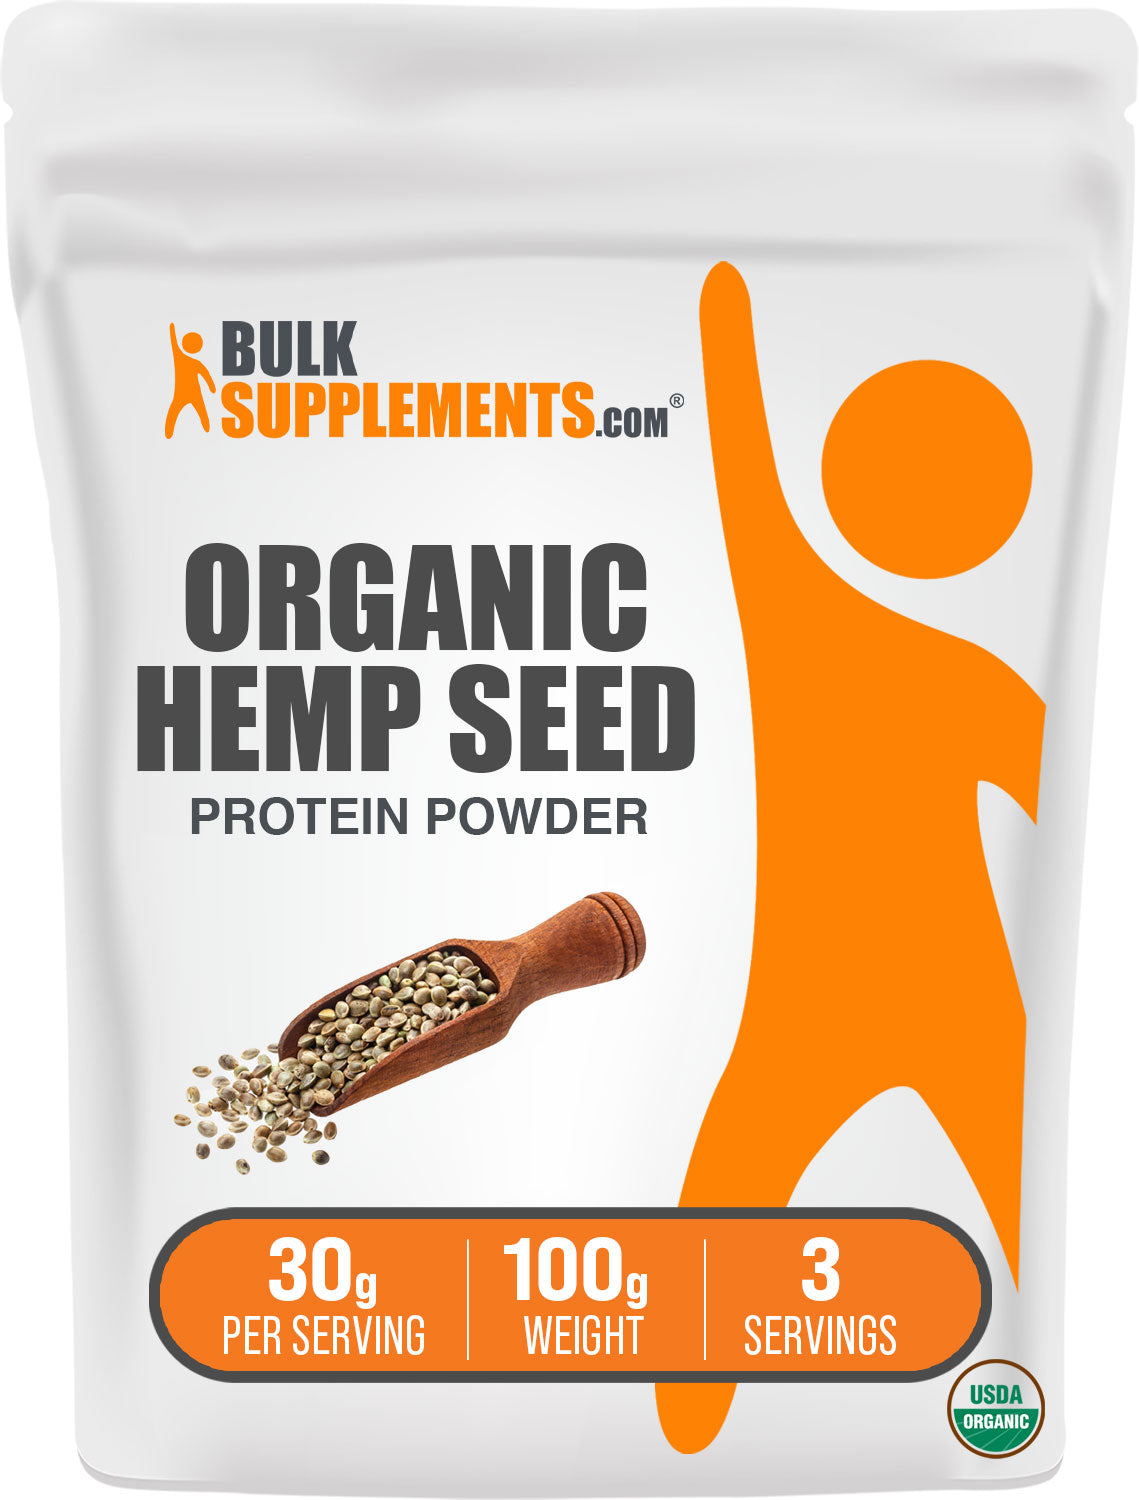 BulkSupplements.com Organic Hemp Seed Protein Powder 100g Bag